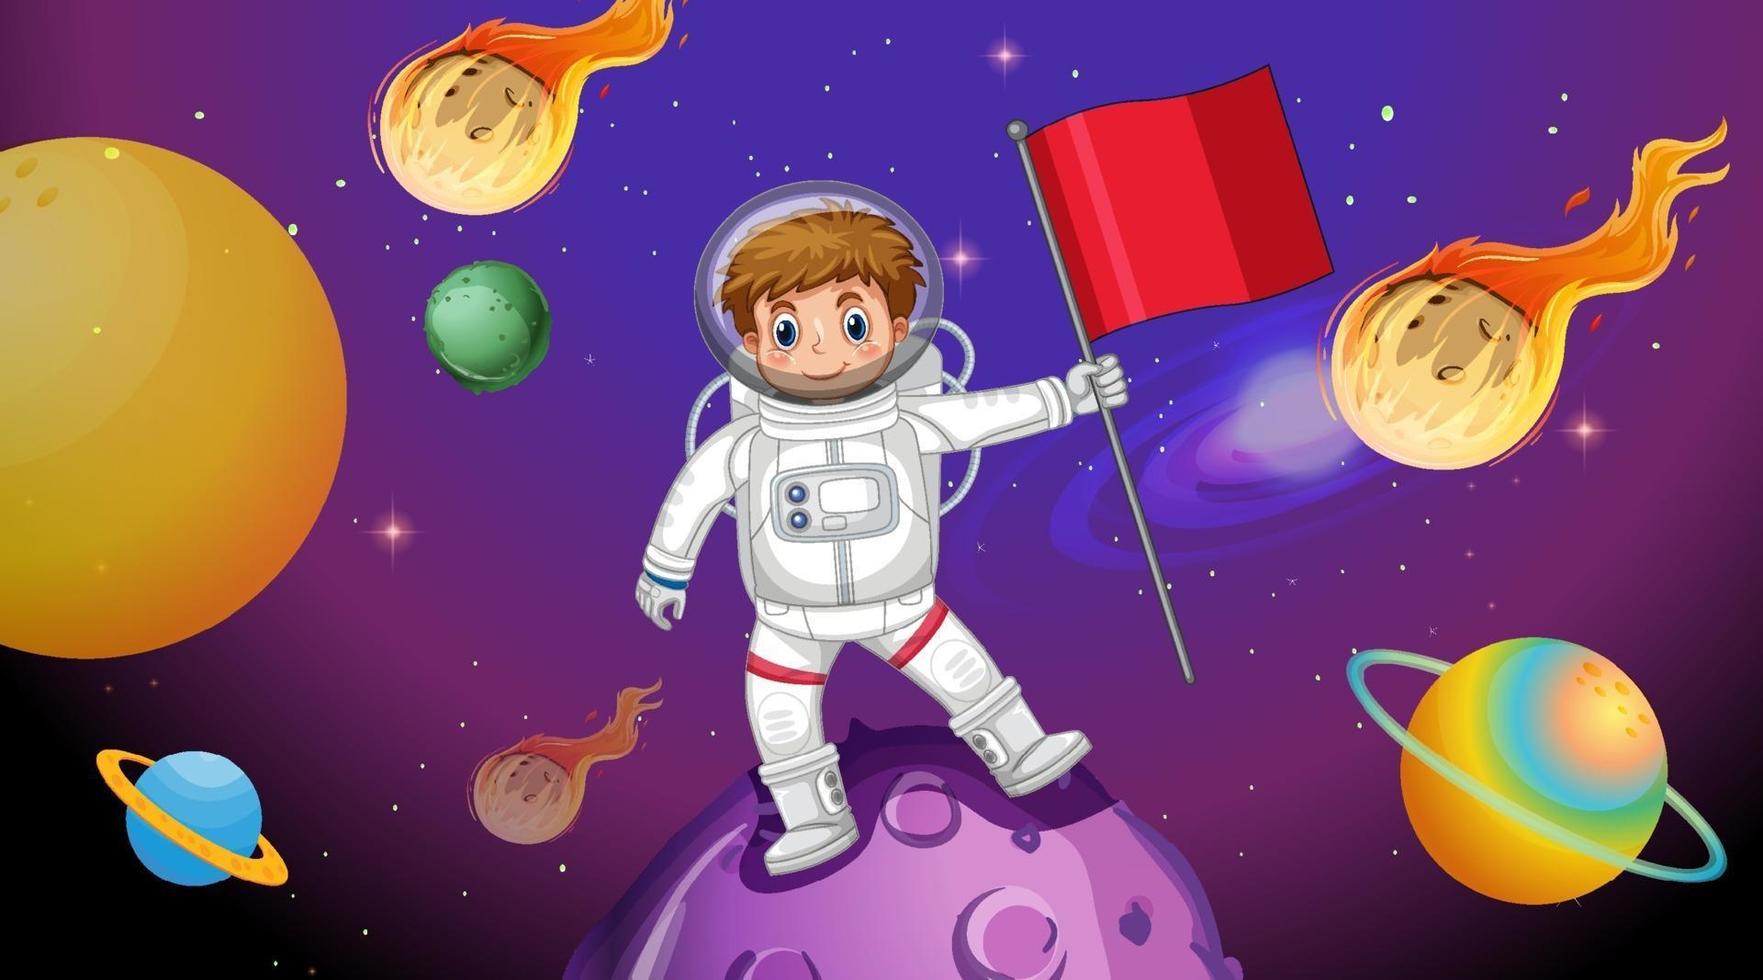 Astronaut kid standing on asteroid in space scene vector